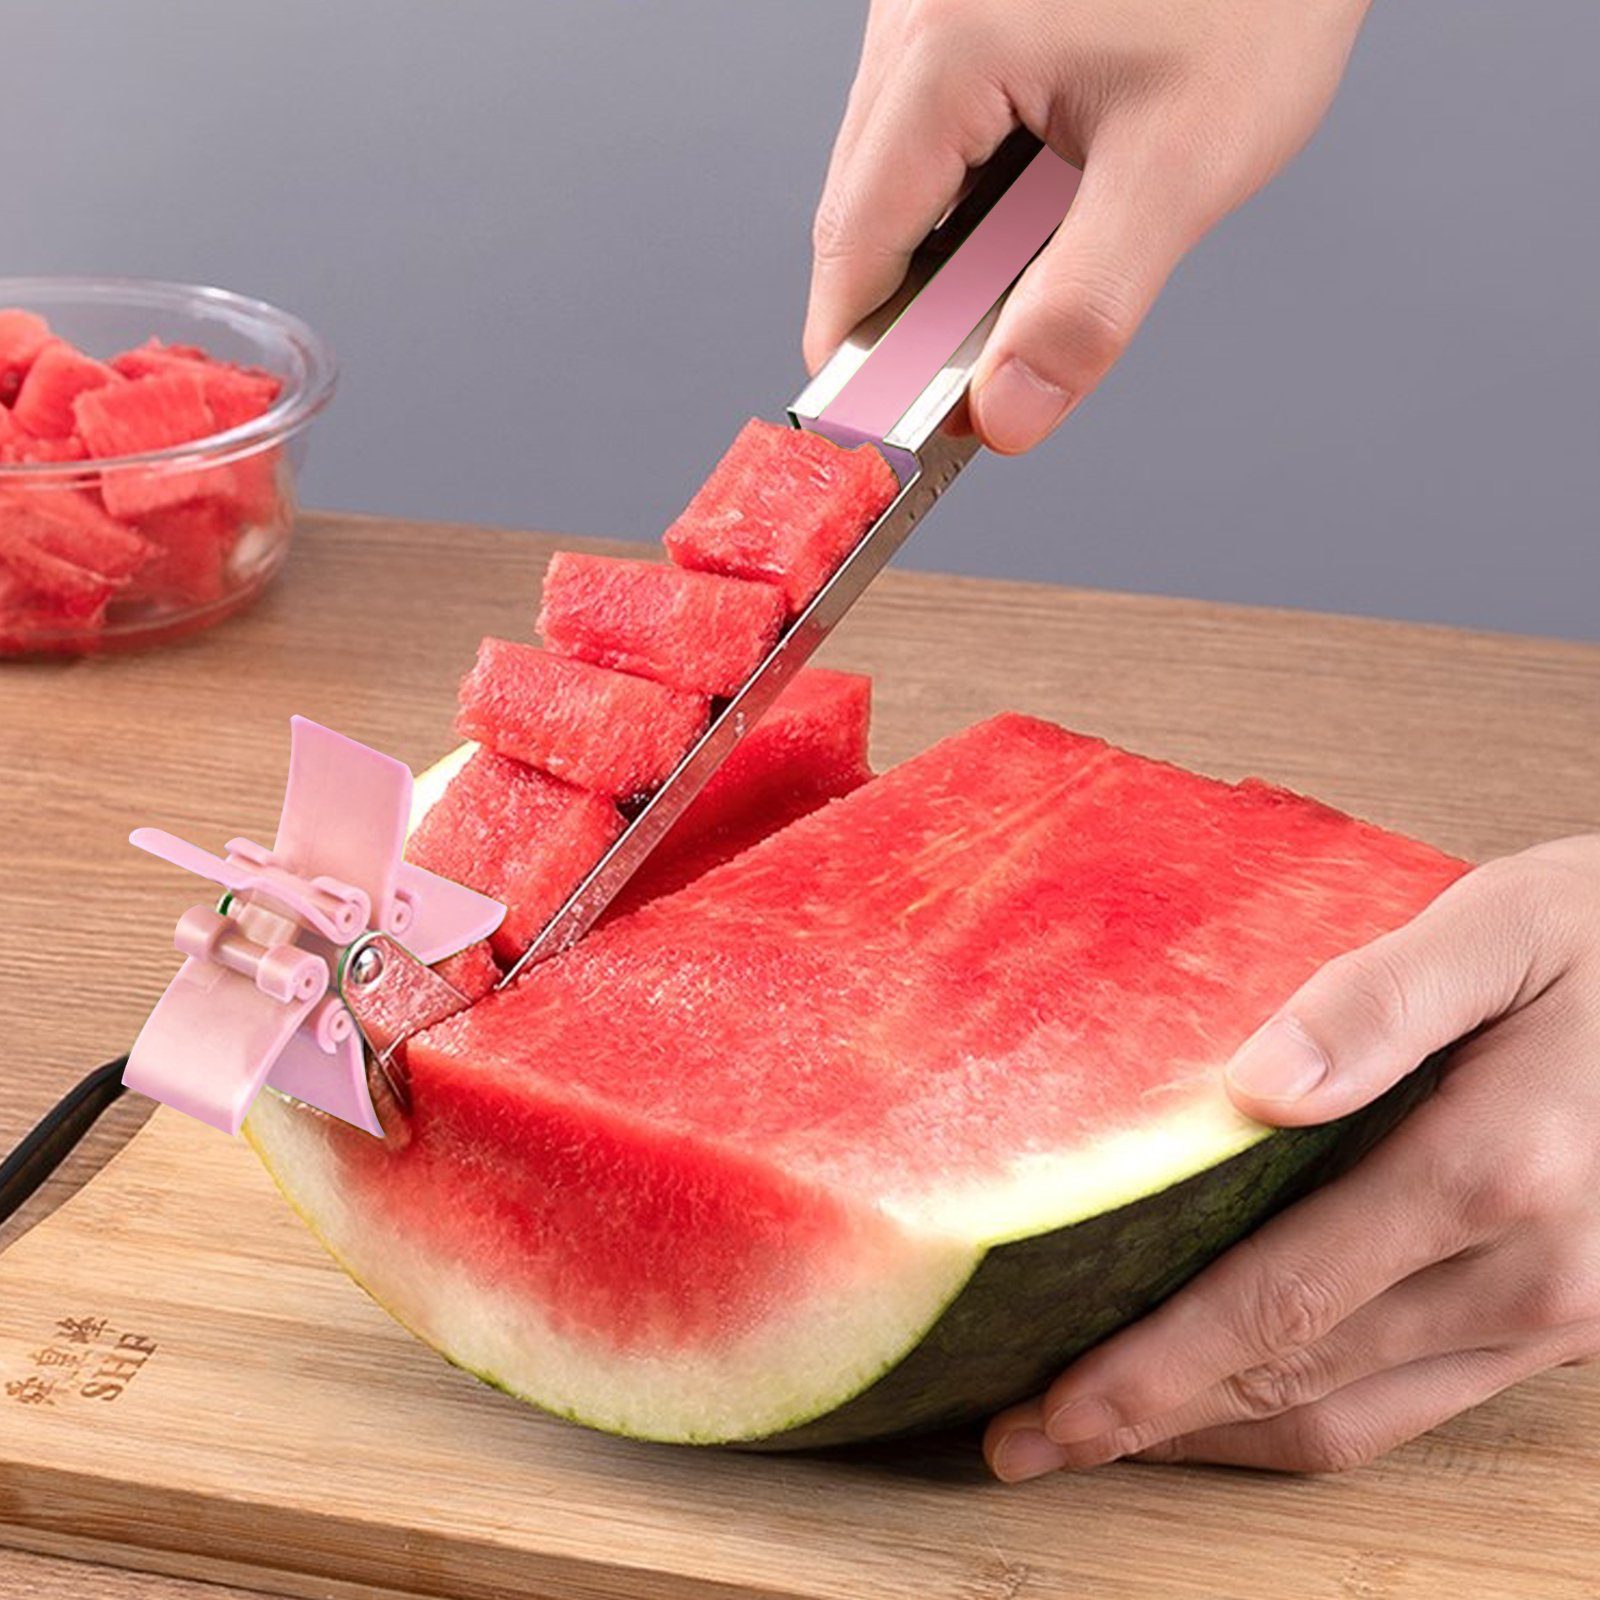 https://www.tasteofhome.com/wp-content/uploads/2022/07/meetco-watermelon-slicer-ecomm-via-walmart.com_.jpeg